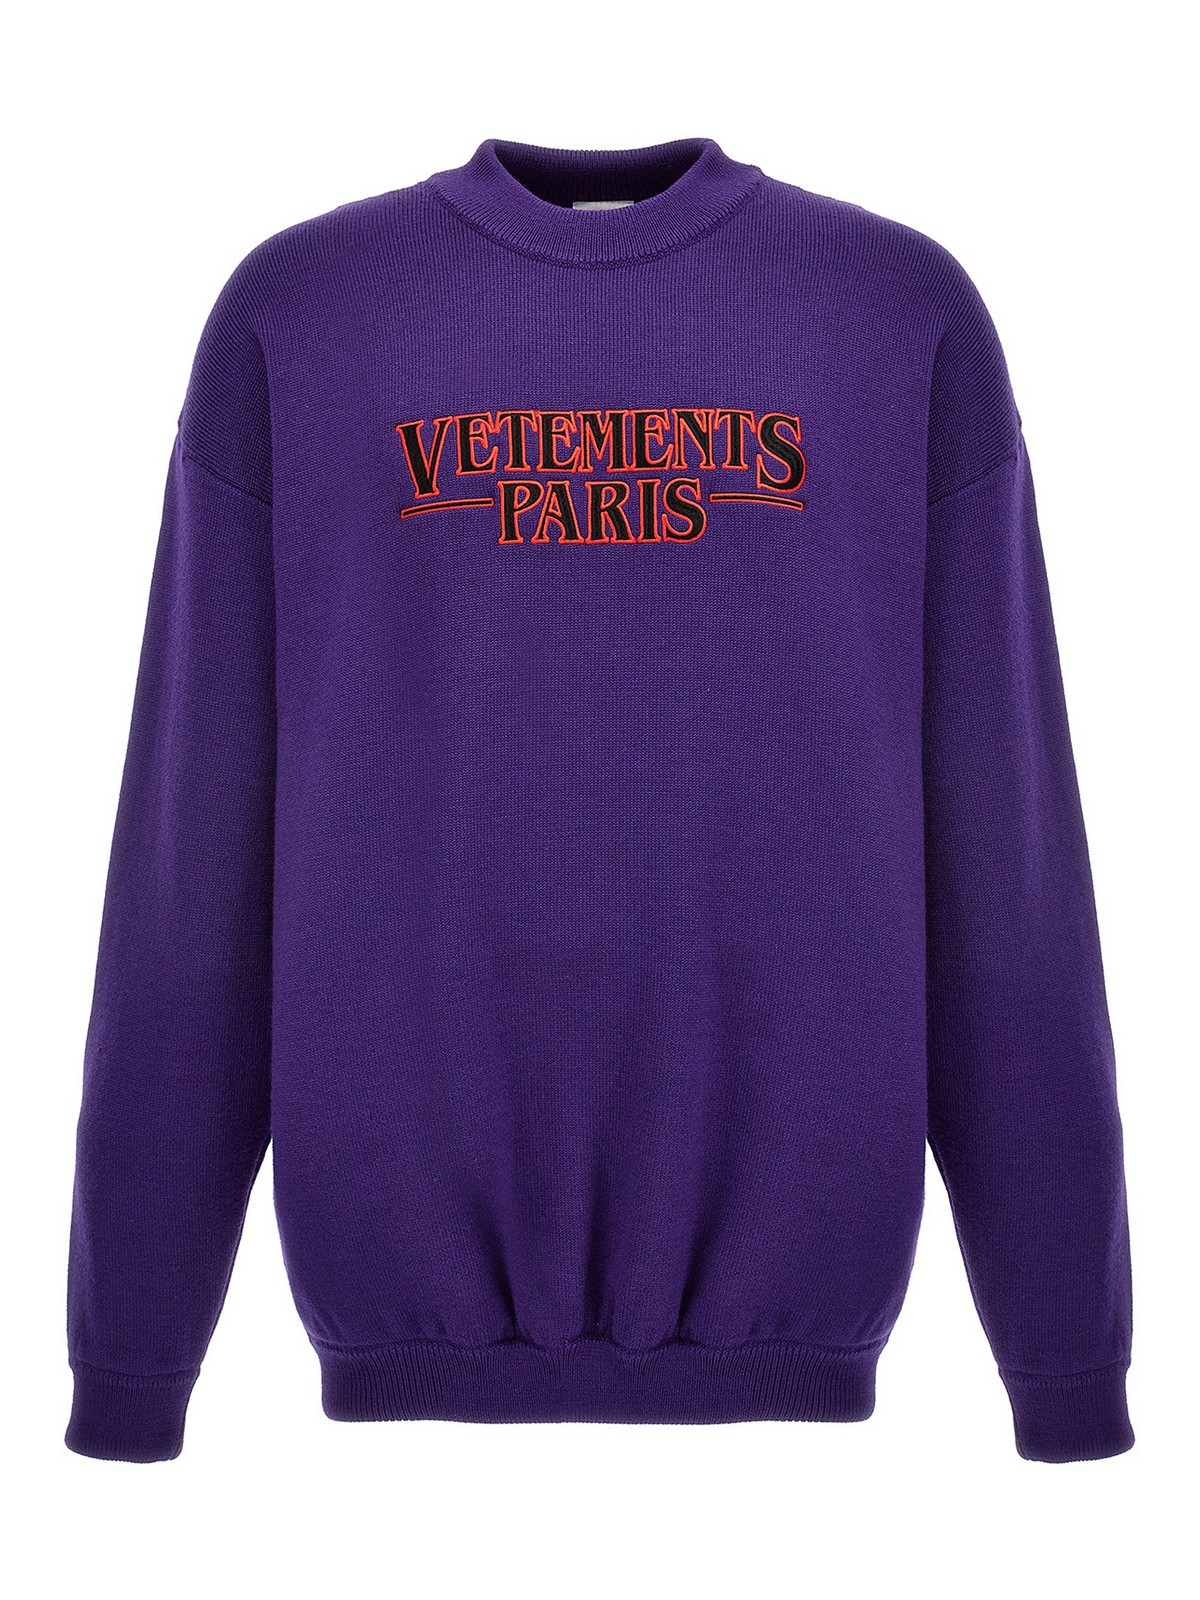 Vetements Paris Sweater In Púrpura